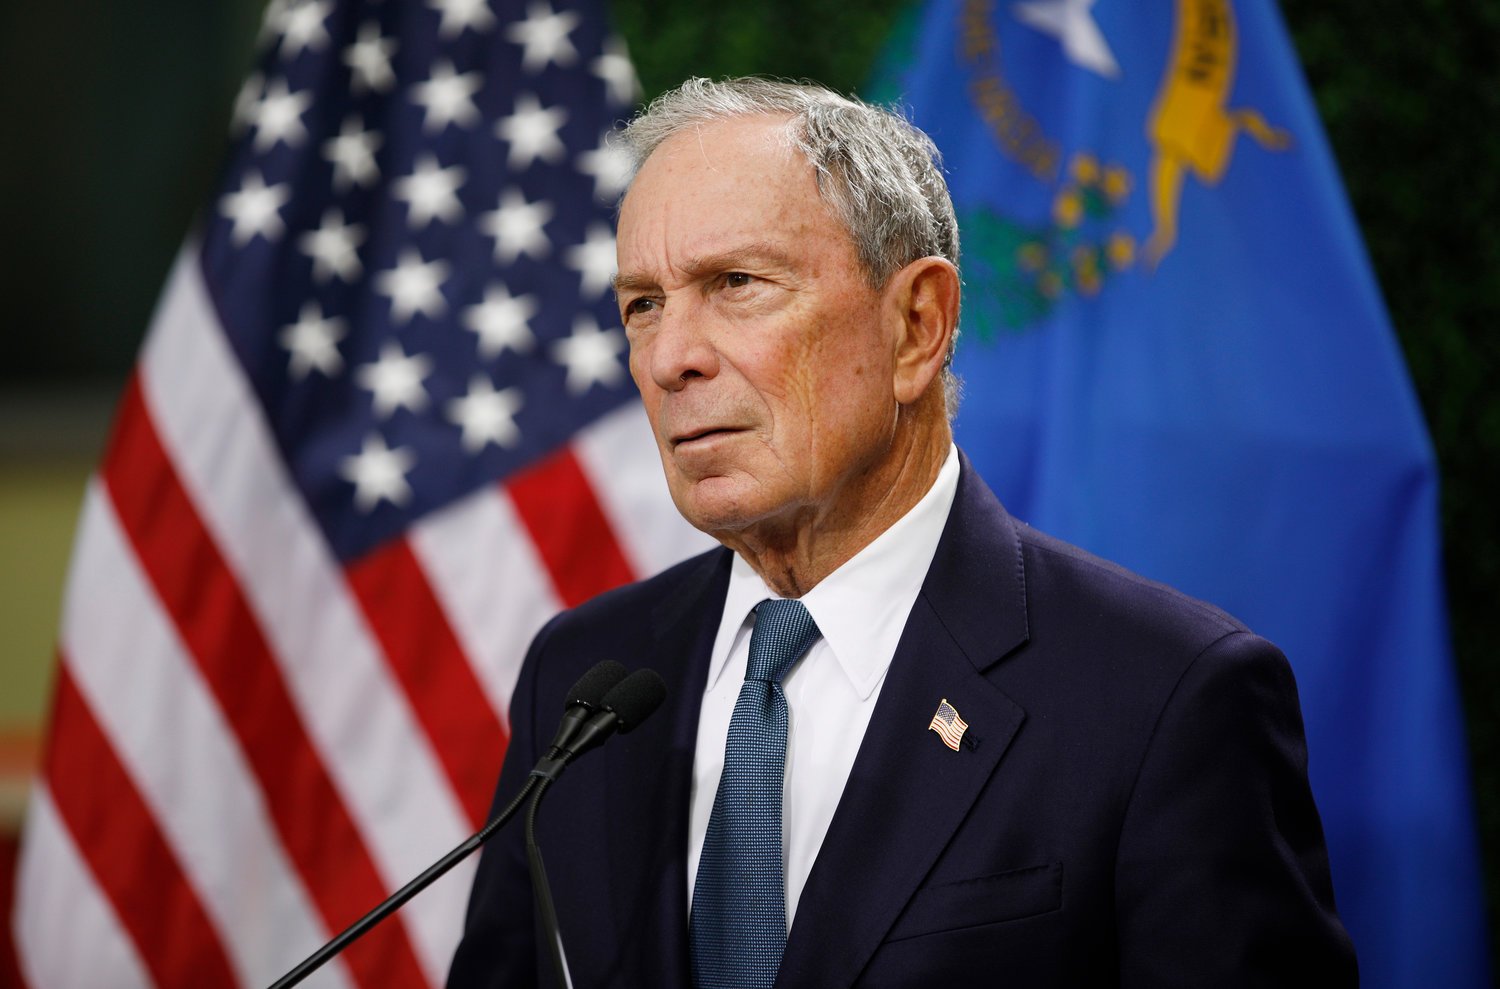 Michael Bloomberg launches Democratic presidential bid ...